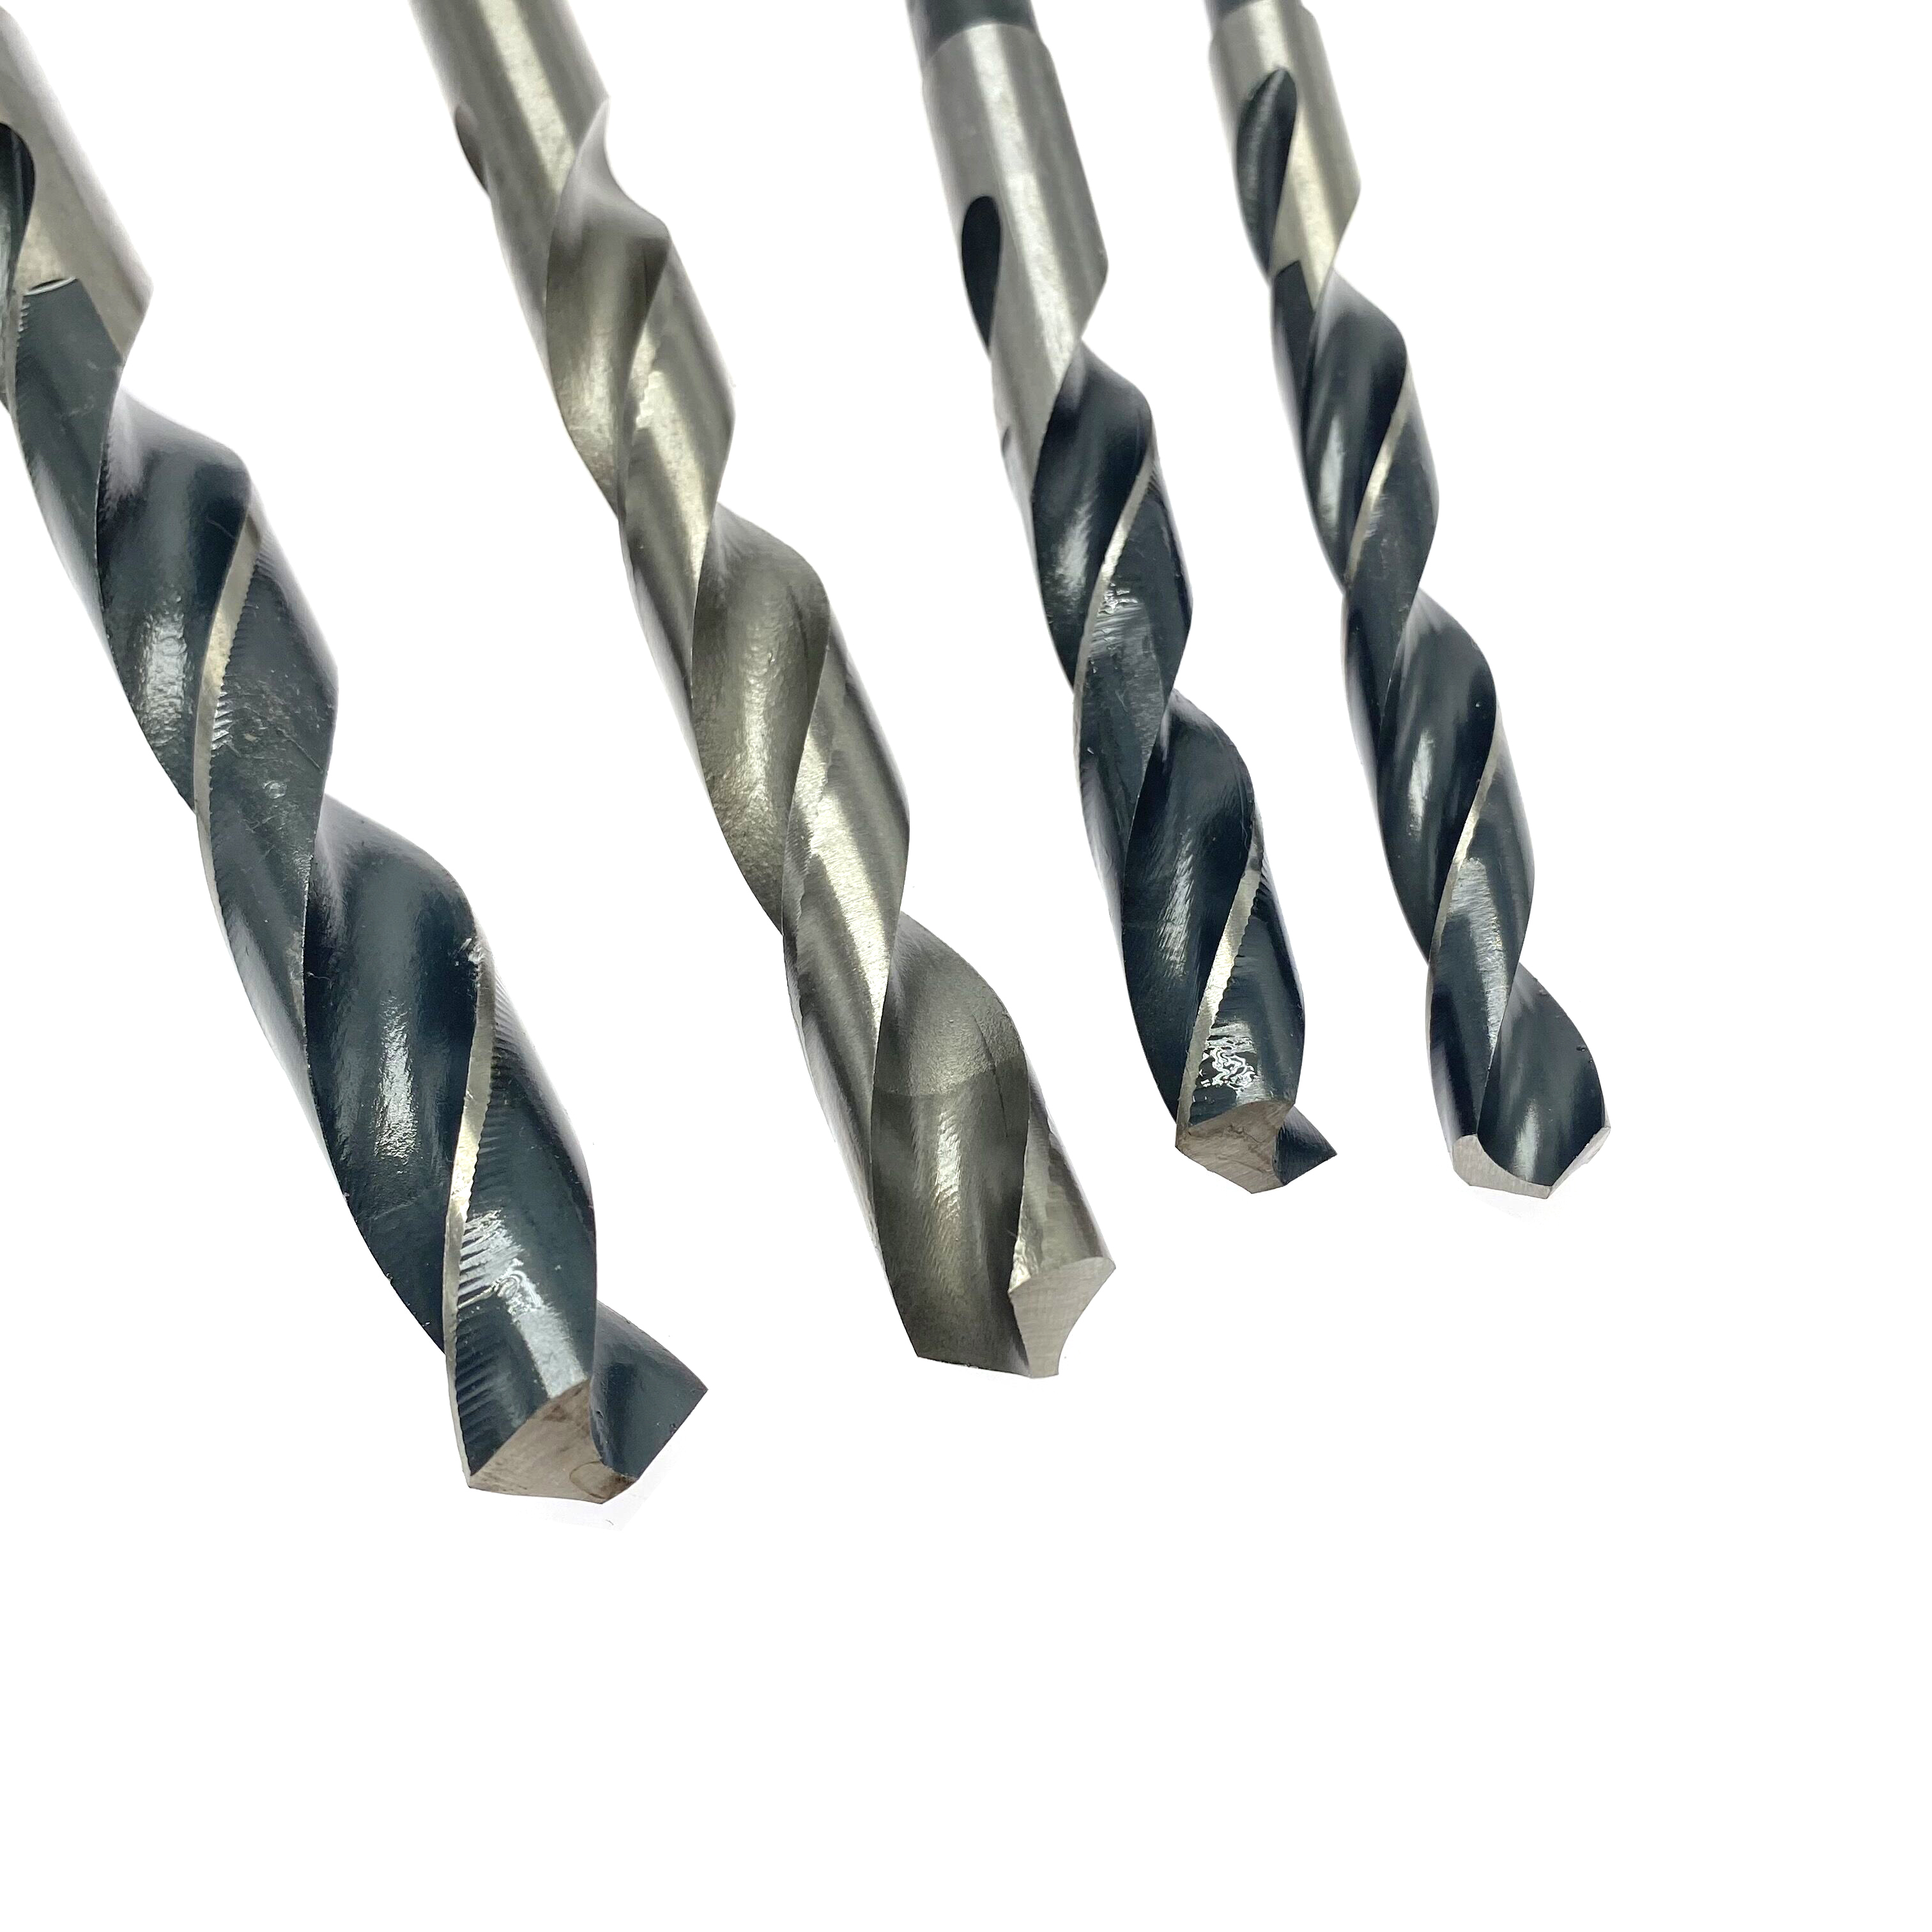 High quality 4241 HSS reduced shank twist drill bit 12/14/16/18/20/22 mm for metal drilling